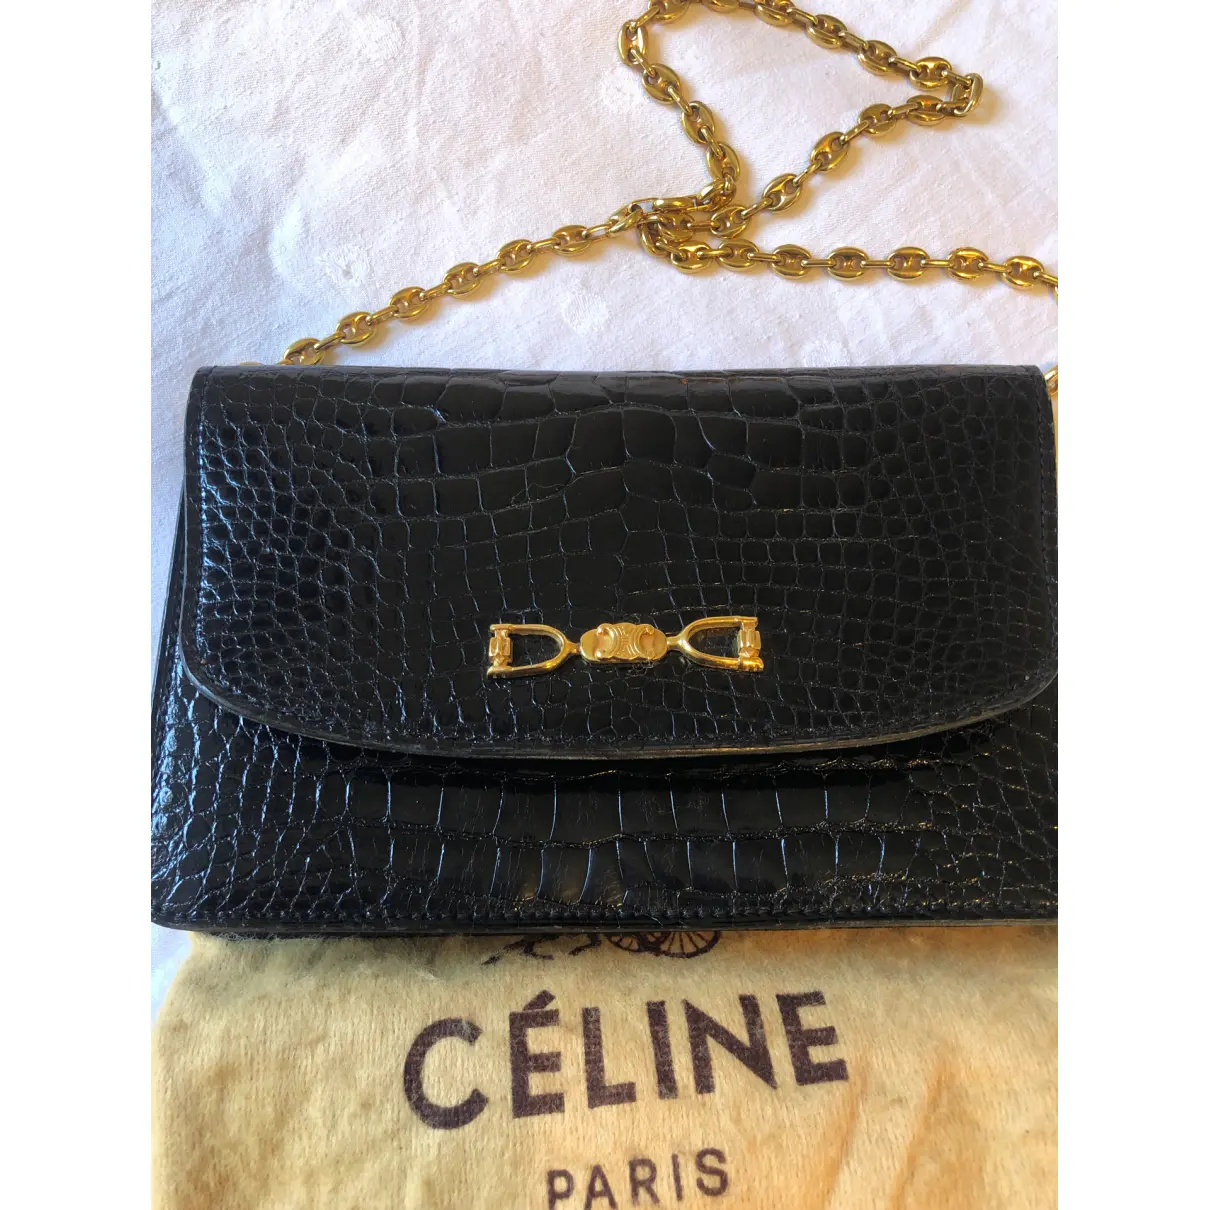 Buy Celine C bag crocodile handbag online